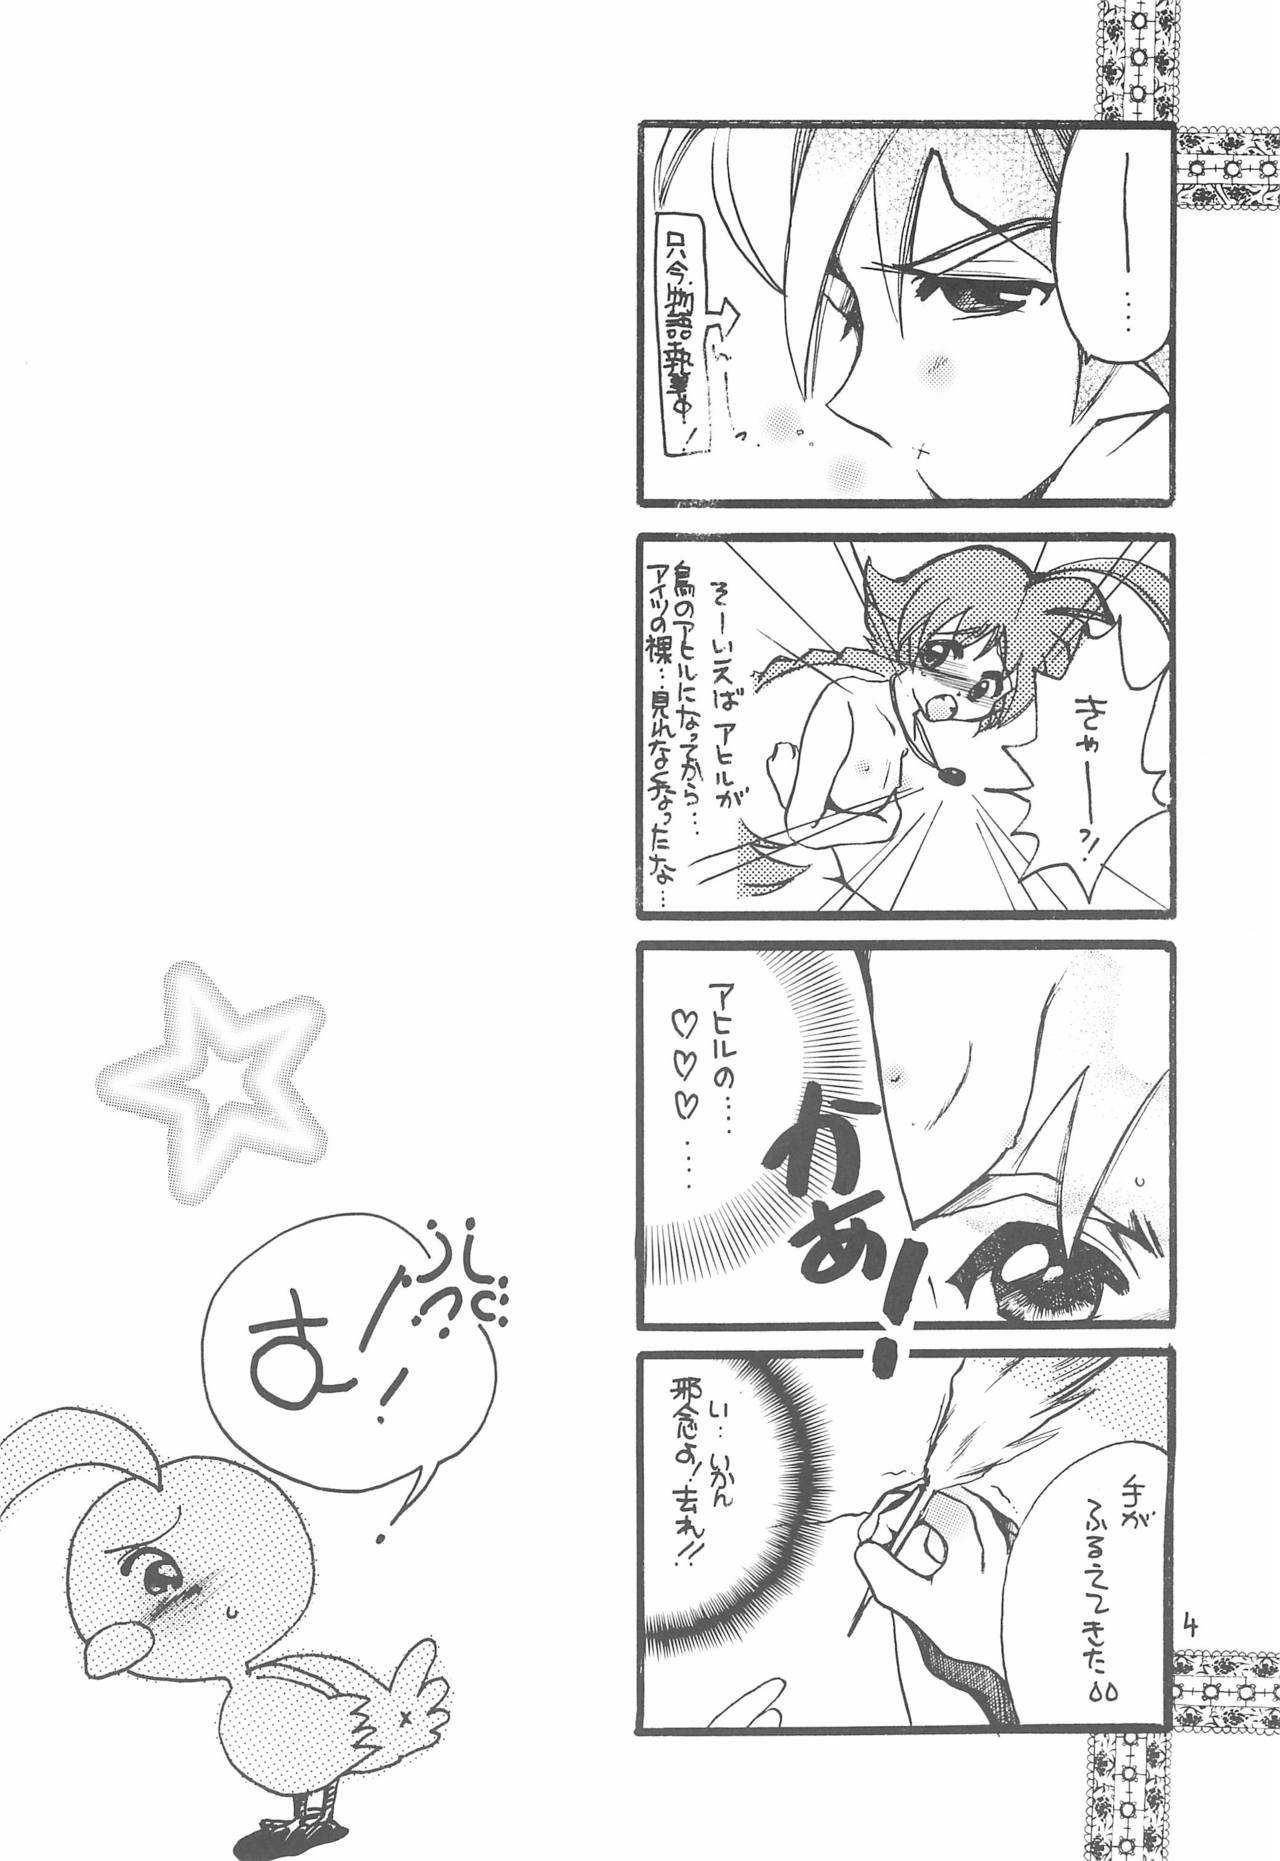 Ladyboy TU TU TU 3 - Princess tutu Backshots - Page 4